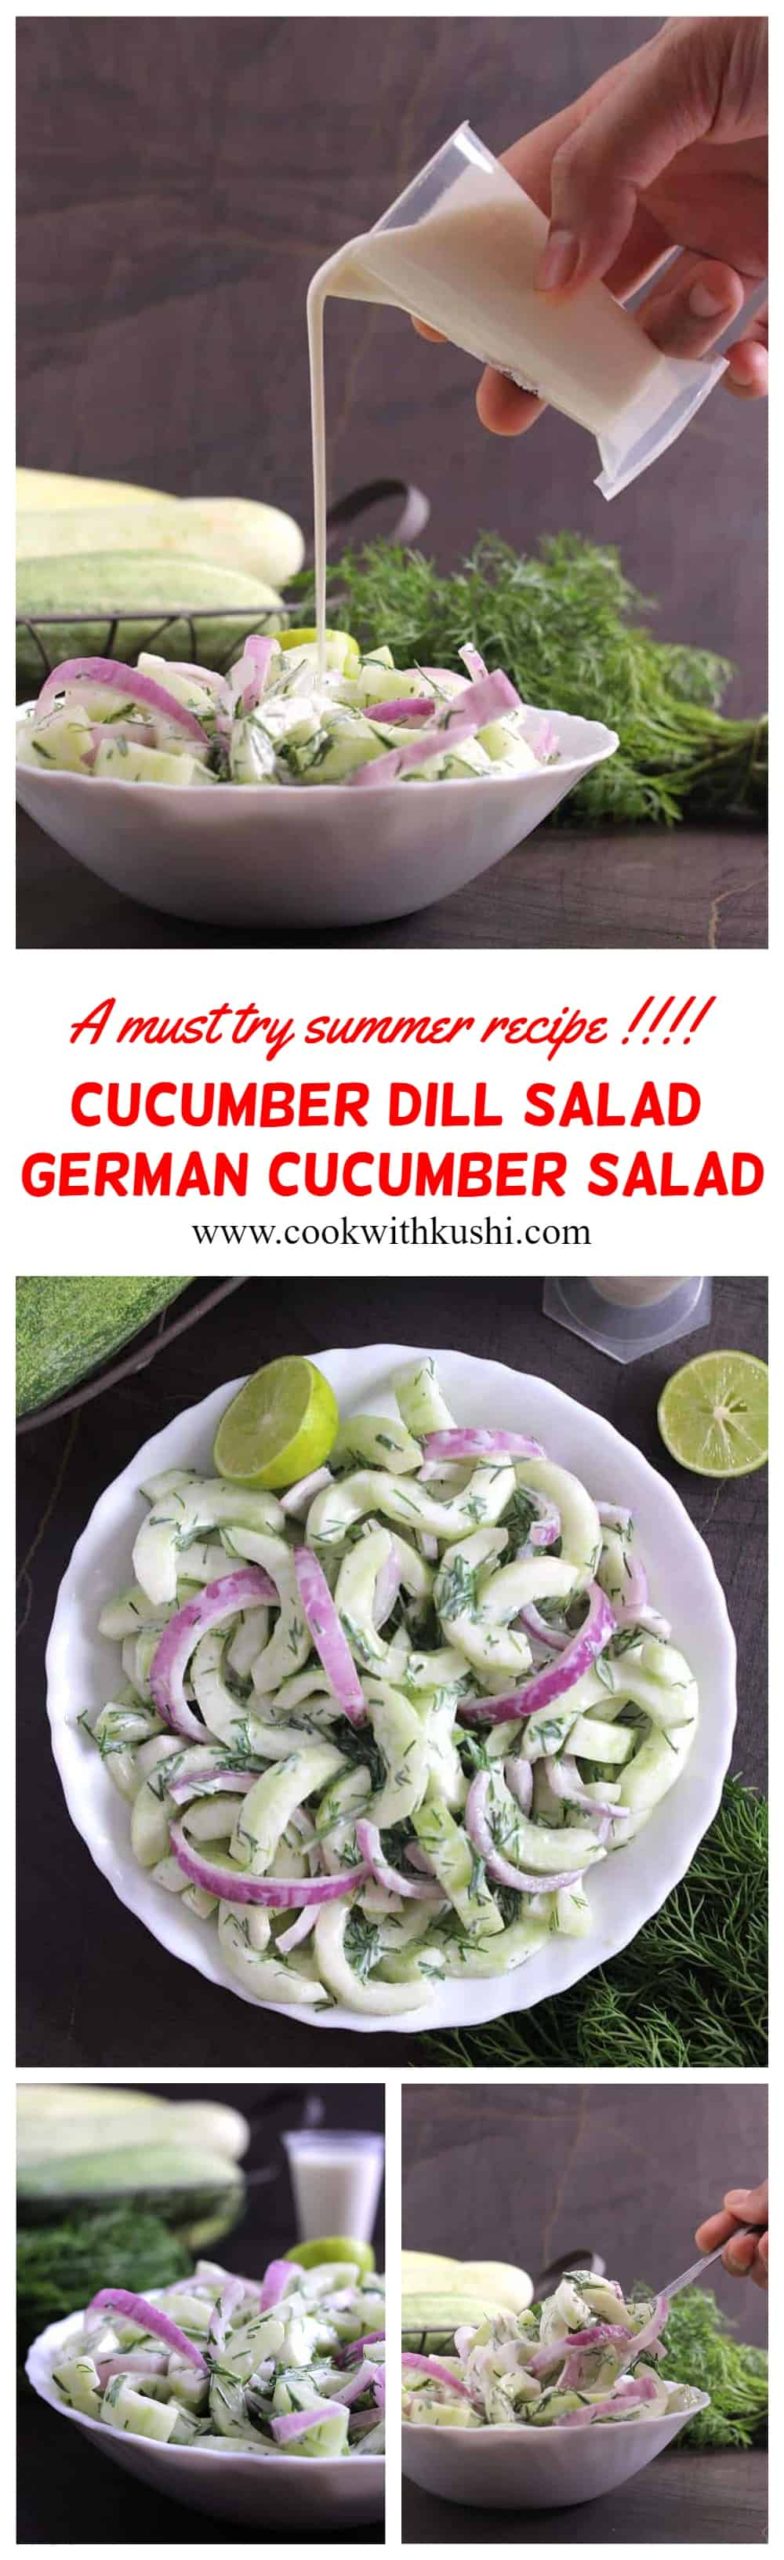 Best & Easy, Healthy & SImple, Creamy Dill Cucumber Salad, German Cucumber Salad, Gurkensalat, Yogurt or sour cream salad dressing, side dishes for lunch and dinner #salad #saladrecipes #saladdressing #healthysalad #summersalad #bbqrecipes #Potluck #Picnic #ketocucumbersalad